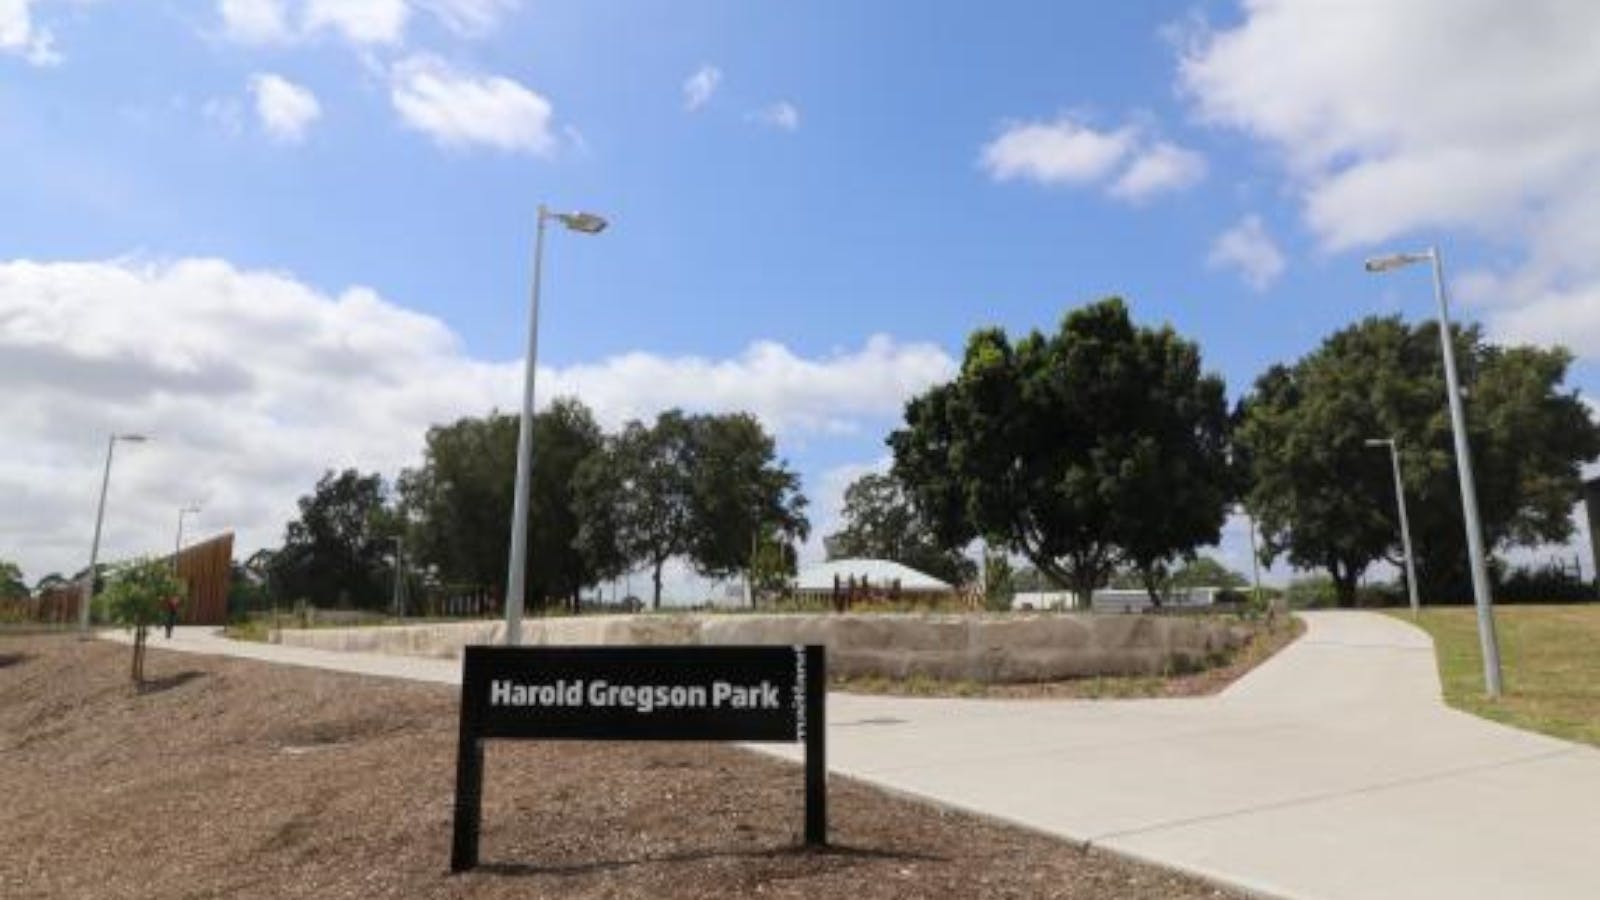 Harold Gregson Park